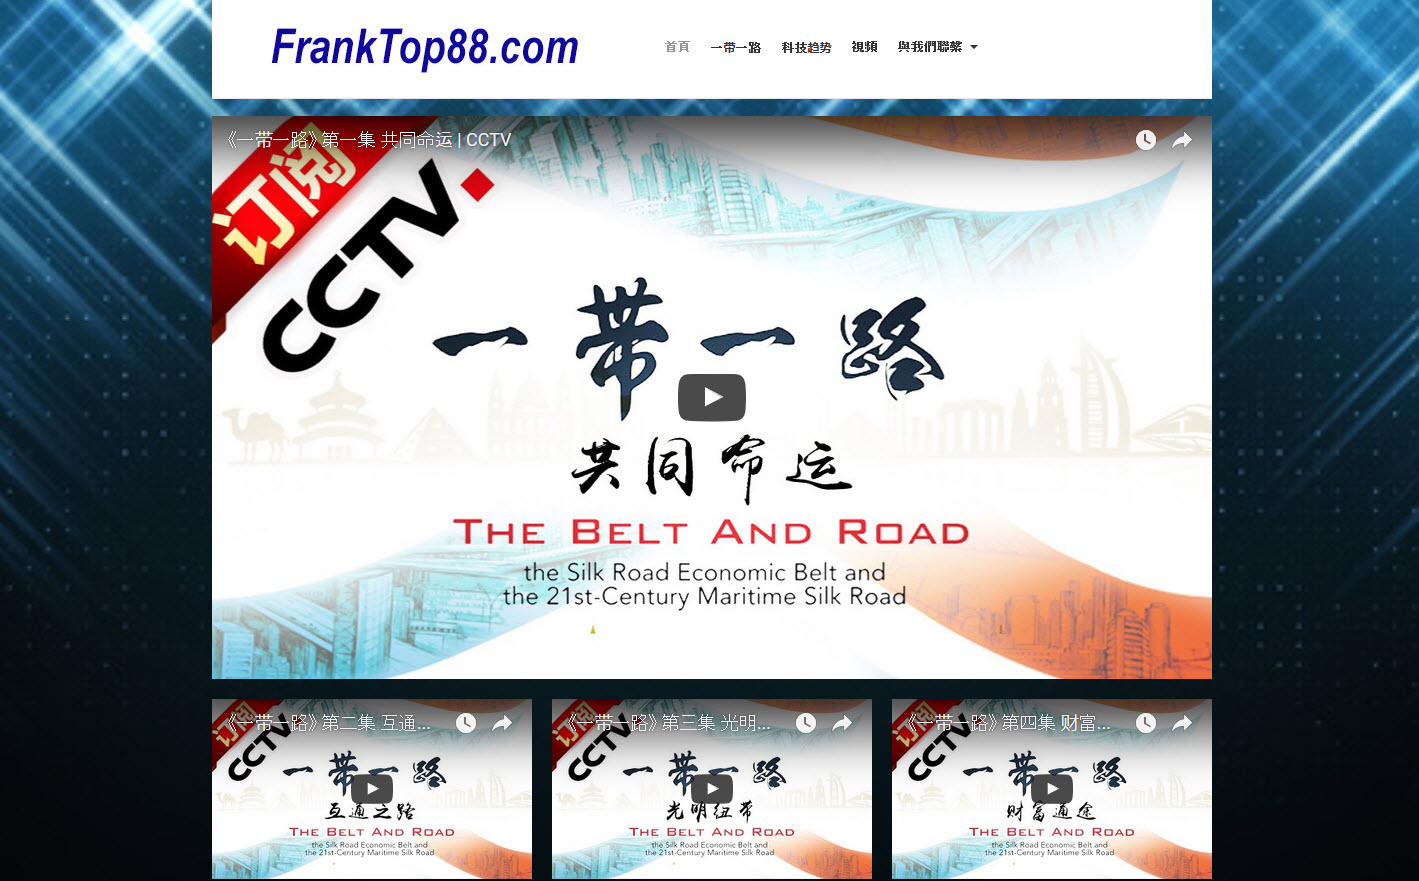 Franktop88: New Silk Road in China